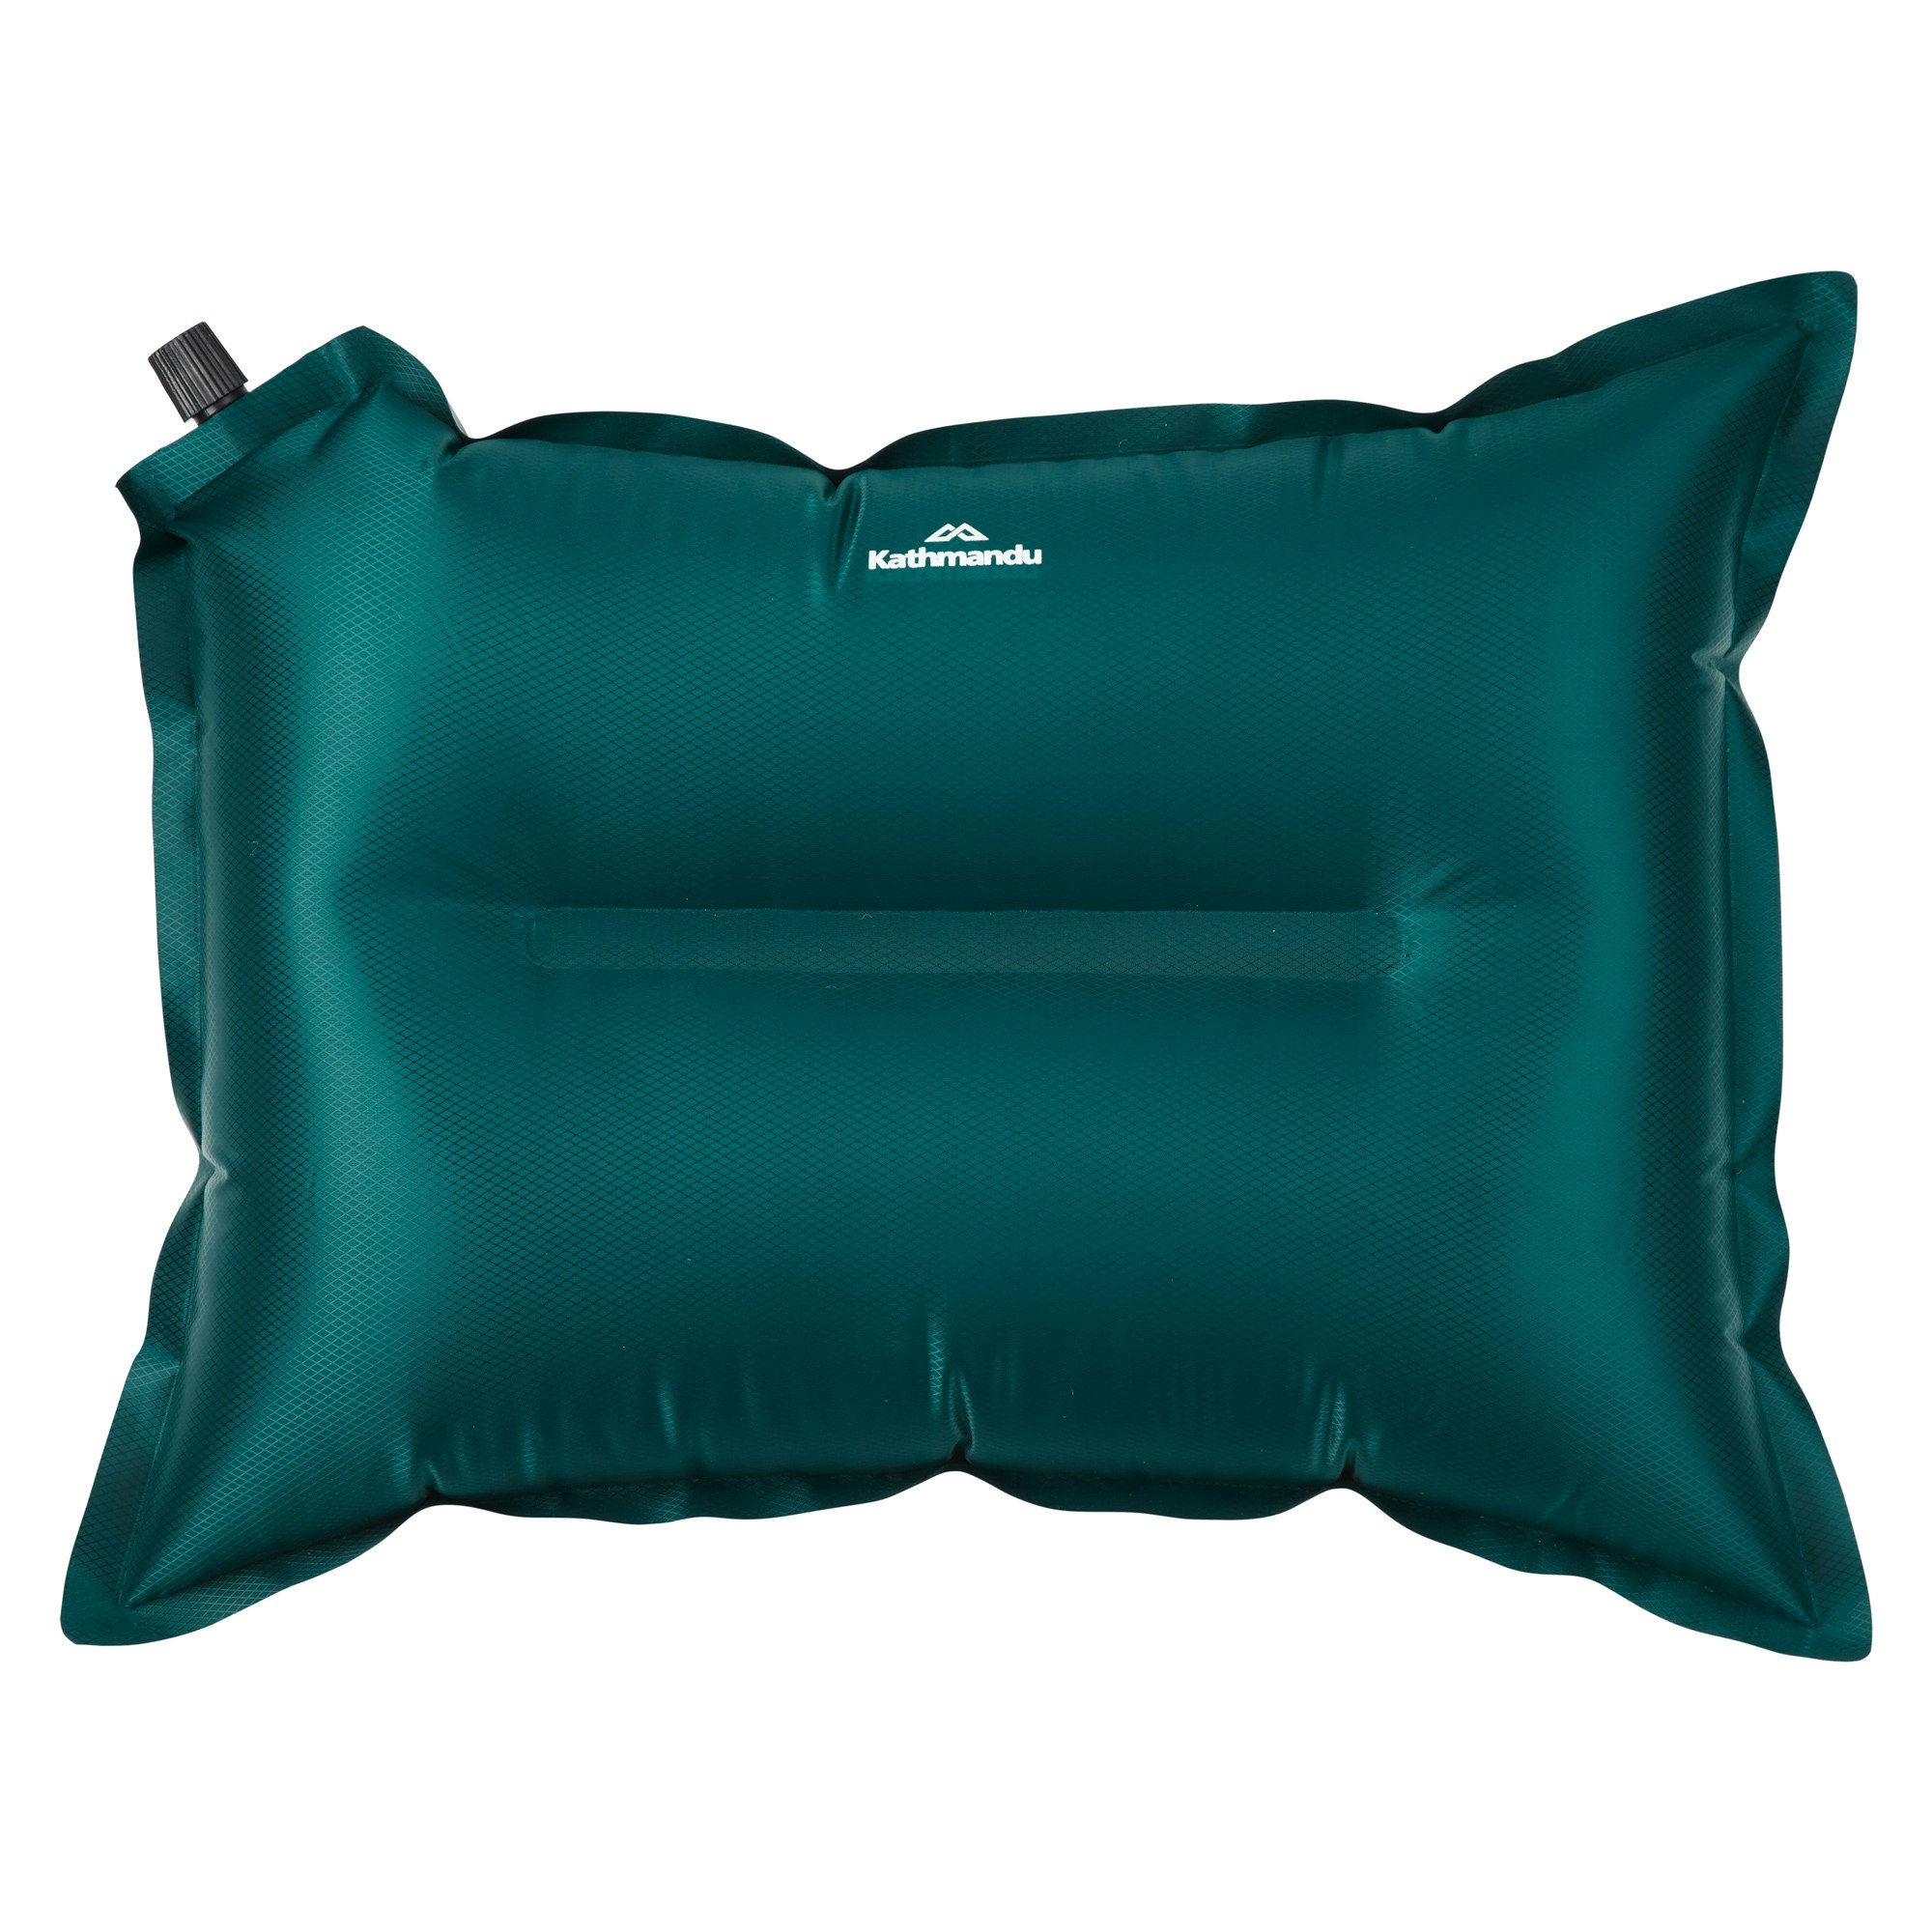 travel pillow self inflating